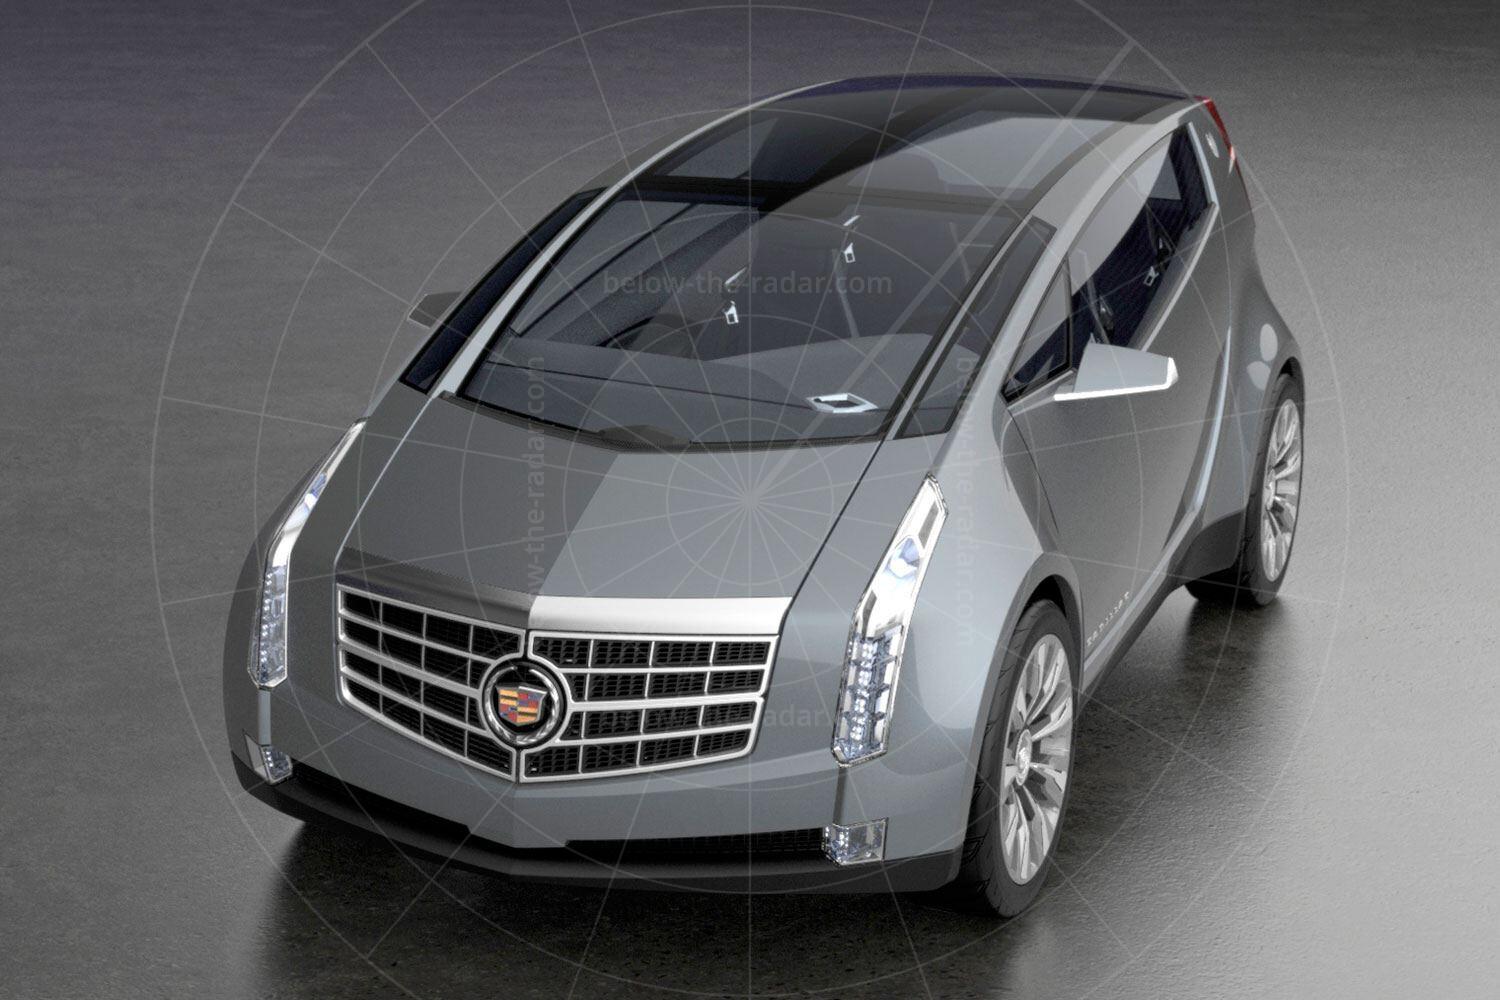 Cadillac Urban Luxury Concept Pic: GM | Cadillac Urban Luxury Concept